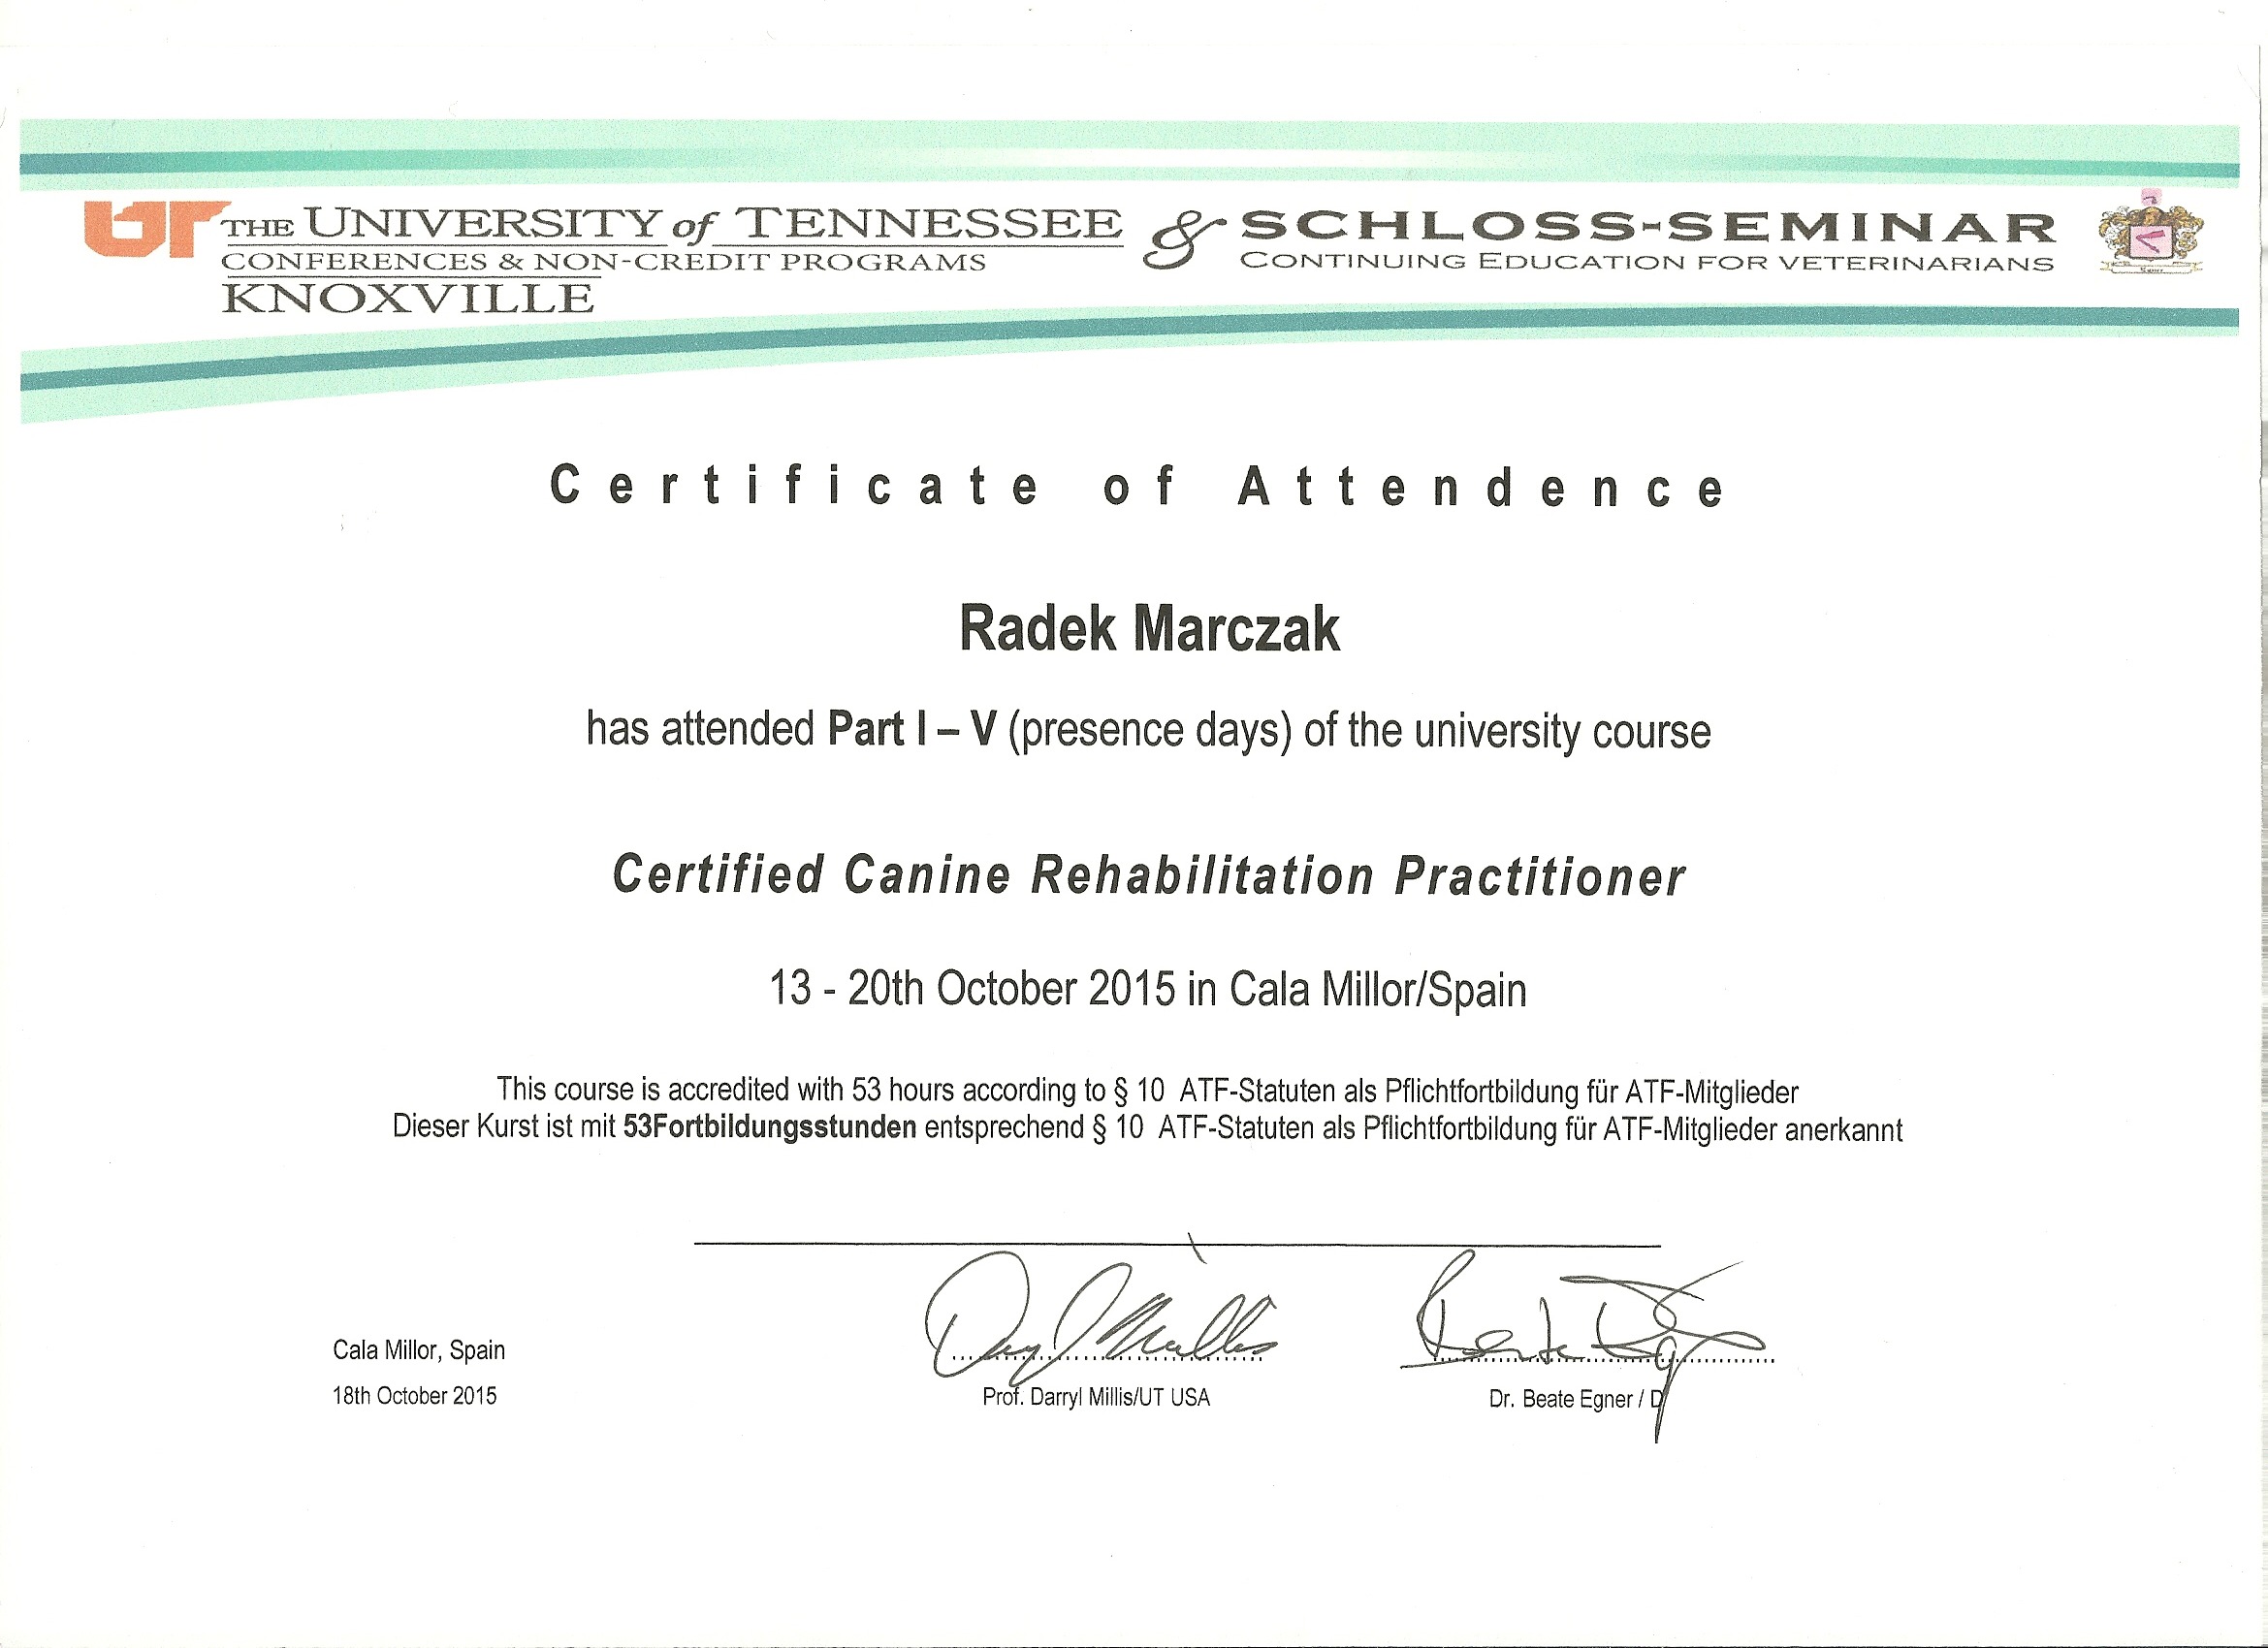 CCRP - dyplom 2015